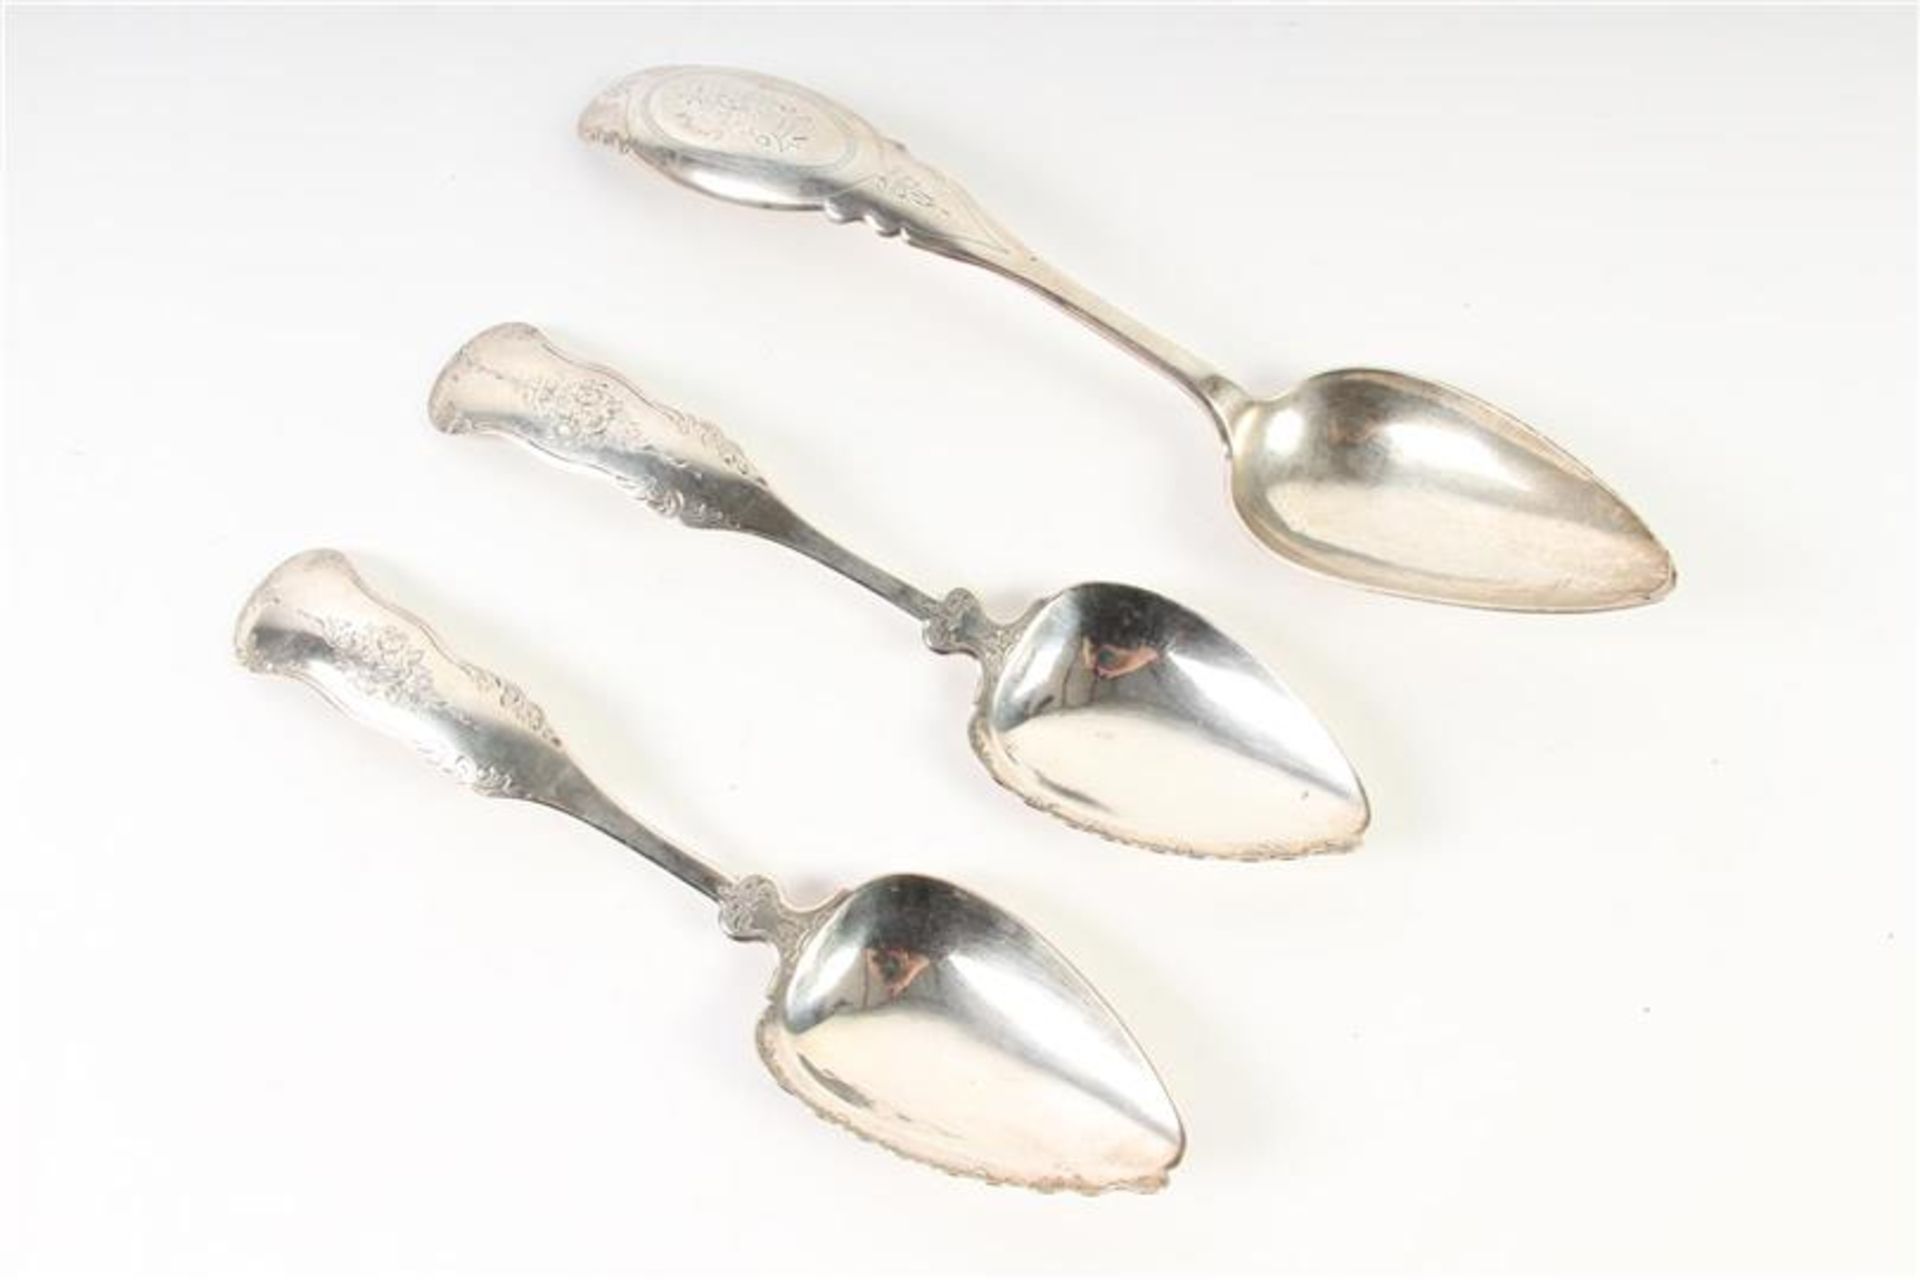 Drie zilveren dienlepels, Hollands gekeurd. H: 23 en 28 cm. Gewicht: 203 g.